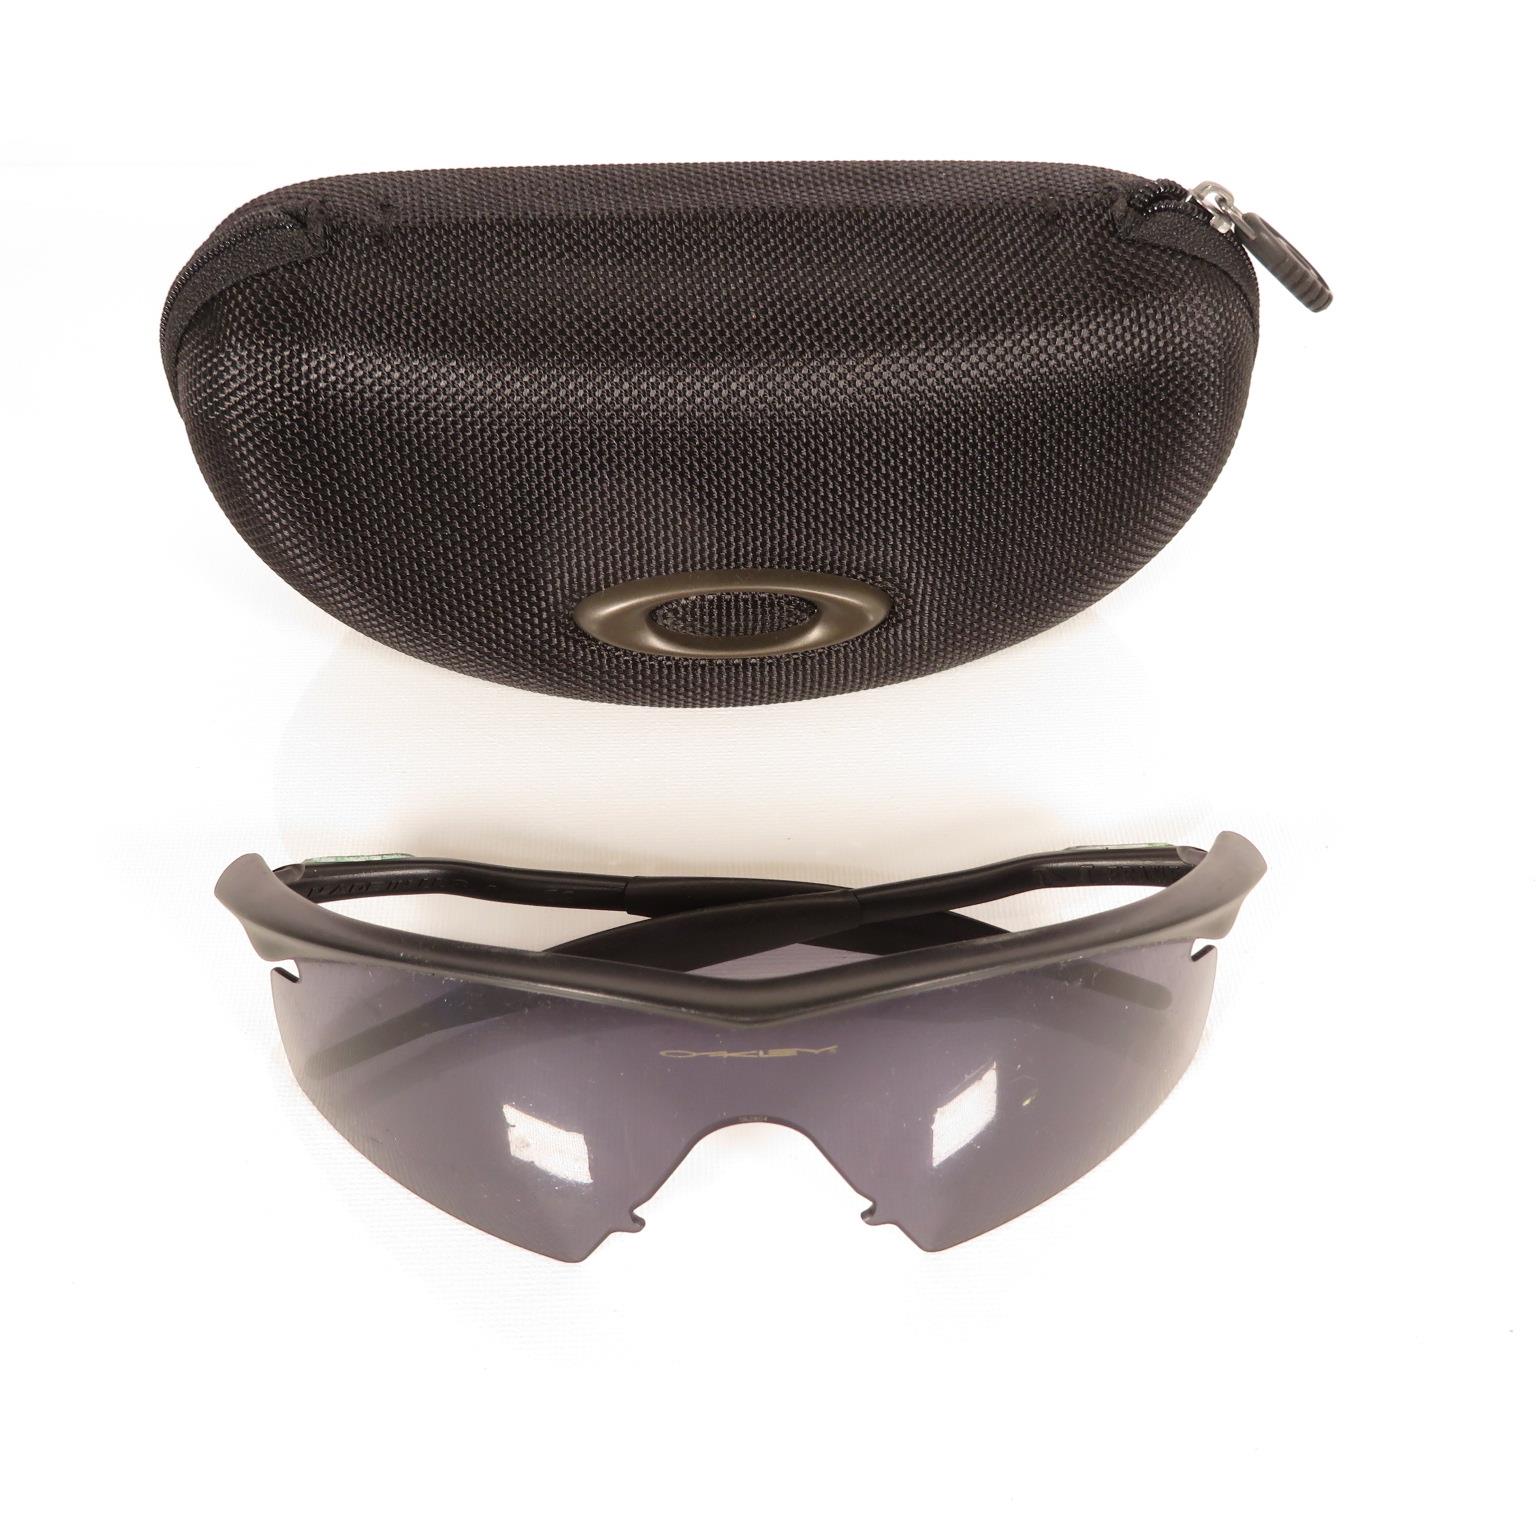 Pair of Porsche Folding Sunglasses, Per Sol folding Sunglasses, Oakley sunglasses and Porsche design - Image 2 of 17